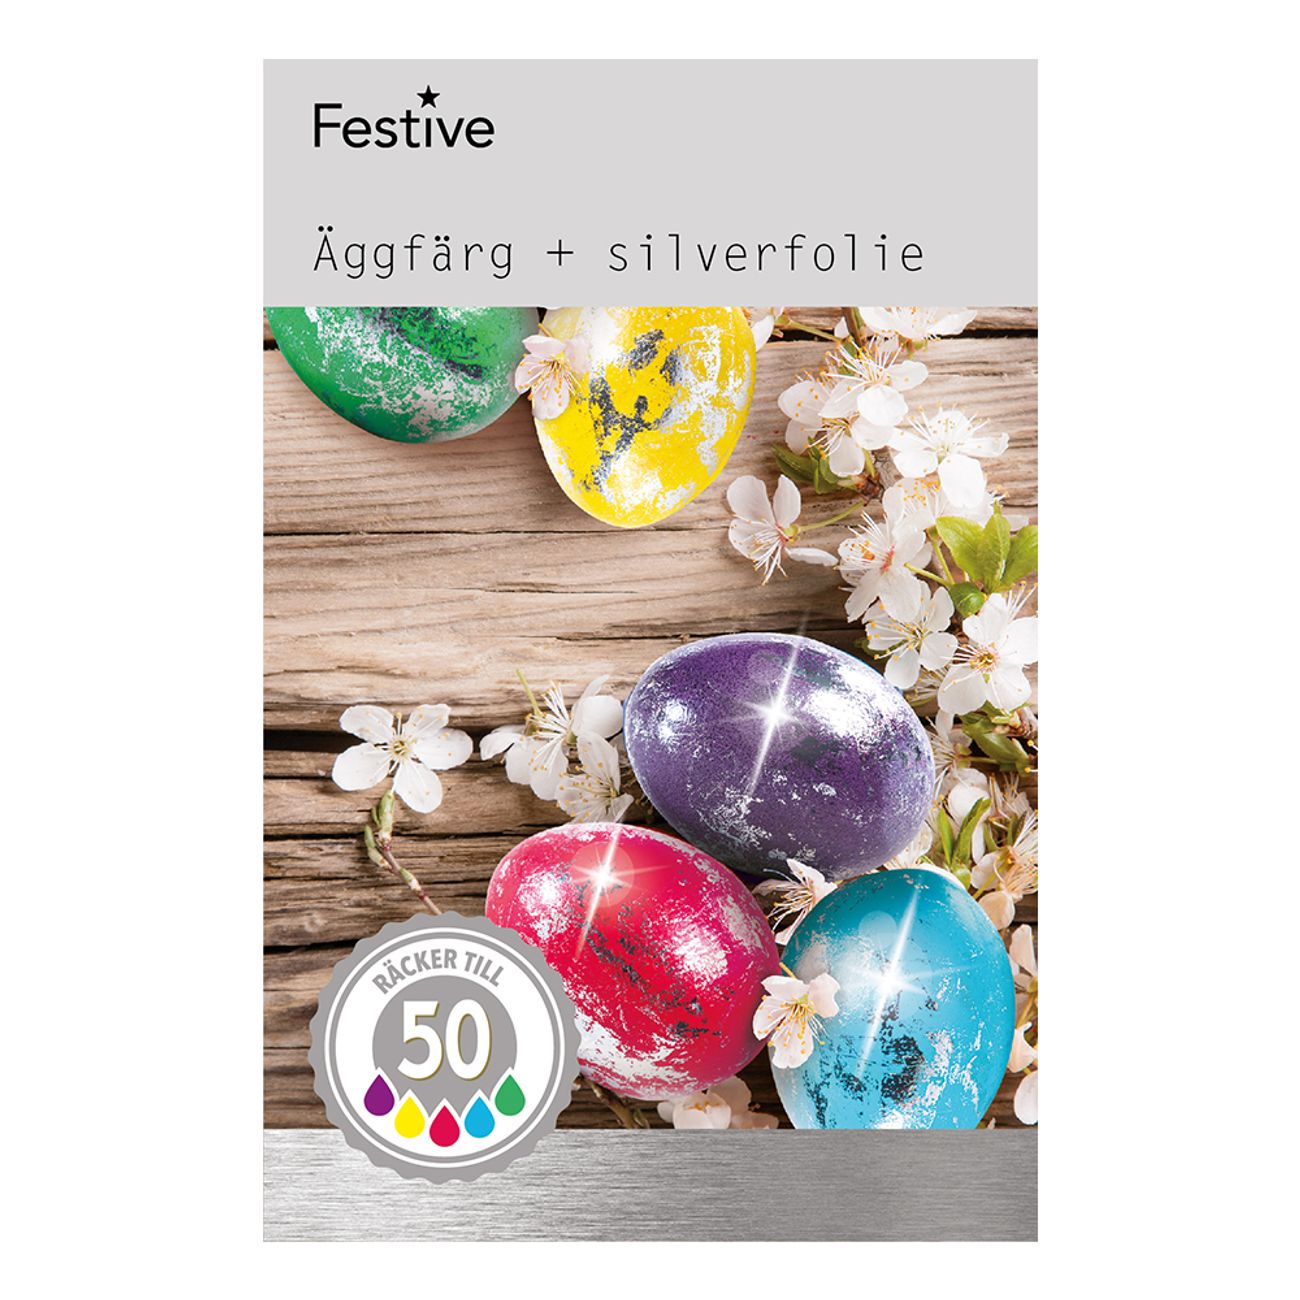 aggfarg-silverfolie-83382-1